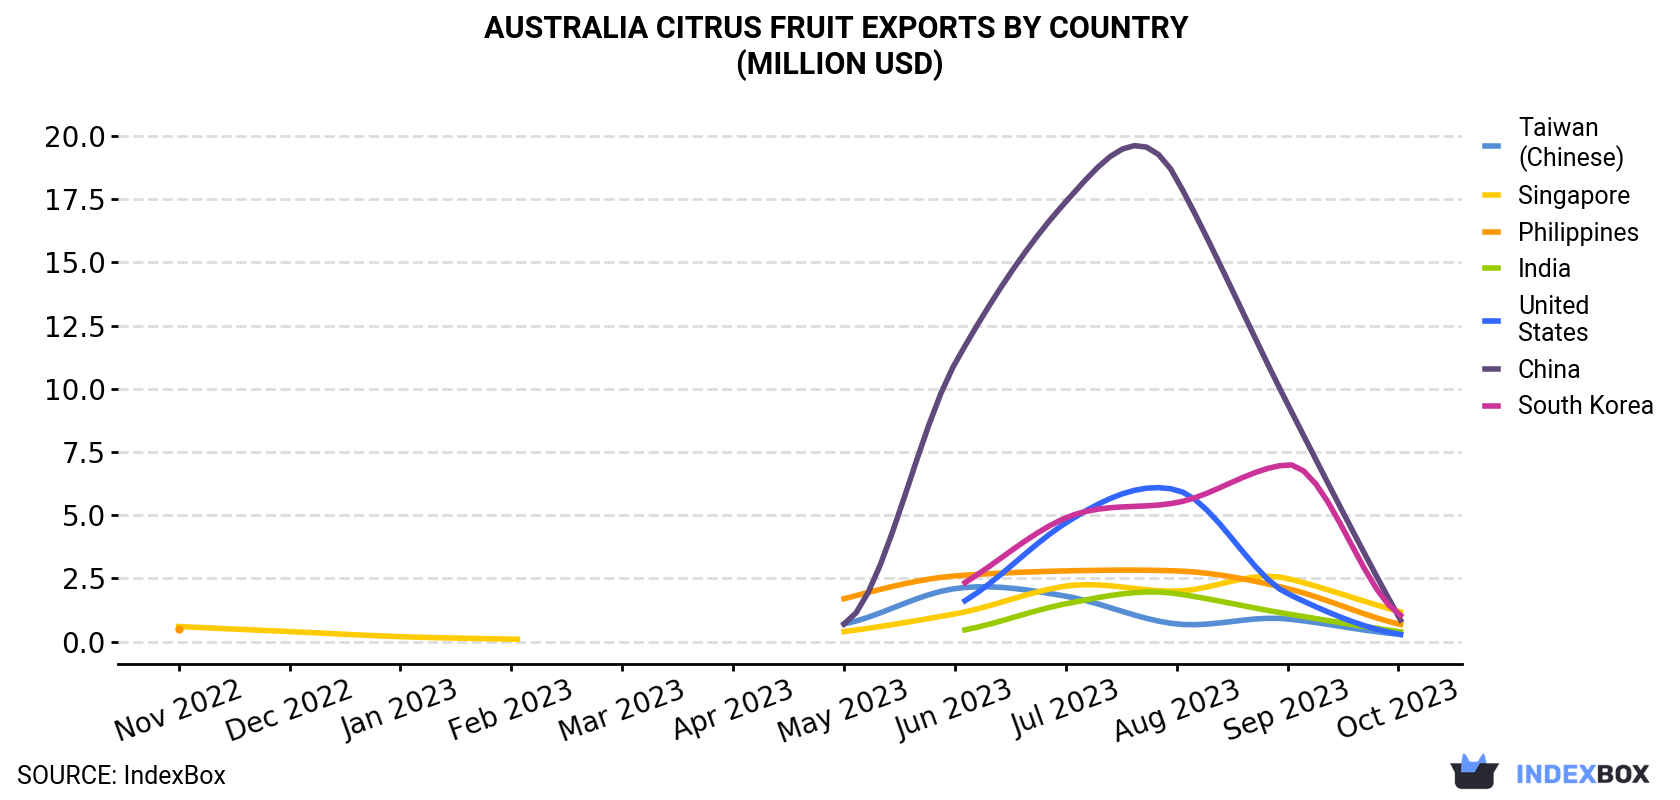 Australia Citrus Fruit Exports By Country (Million USD)